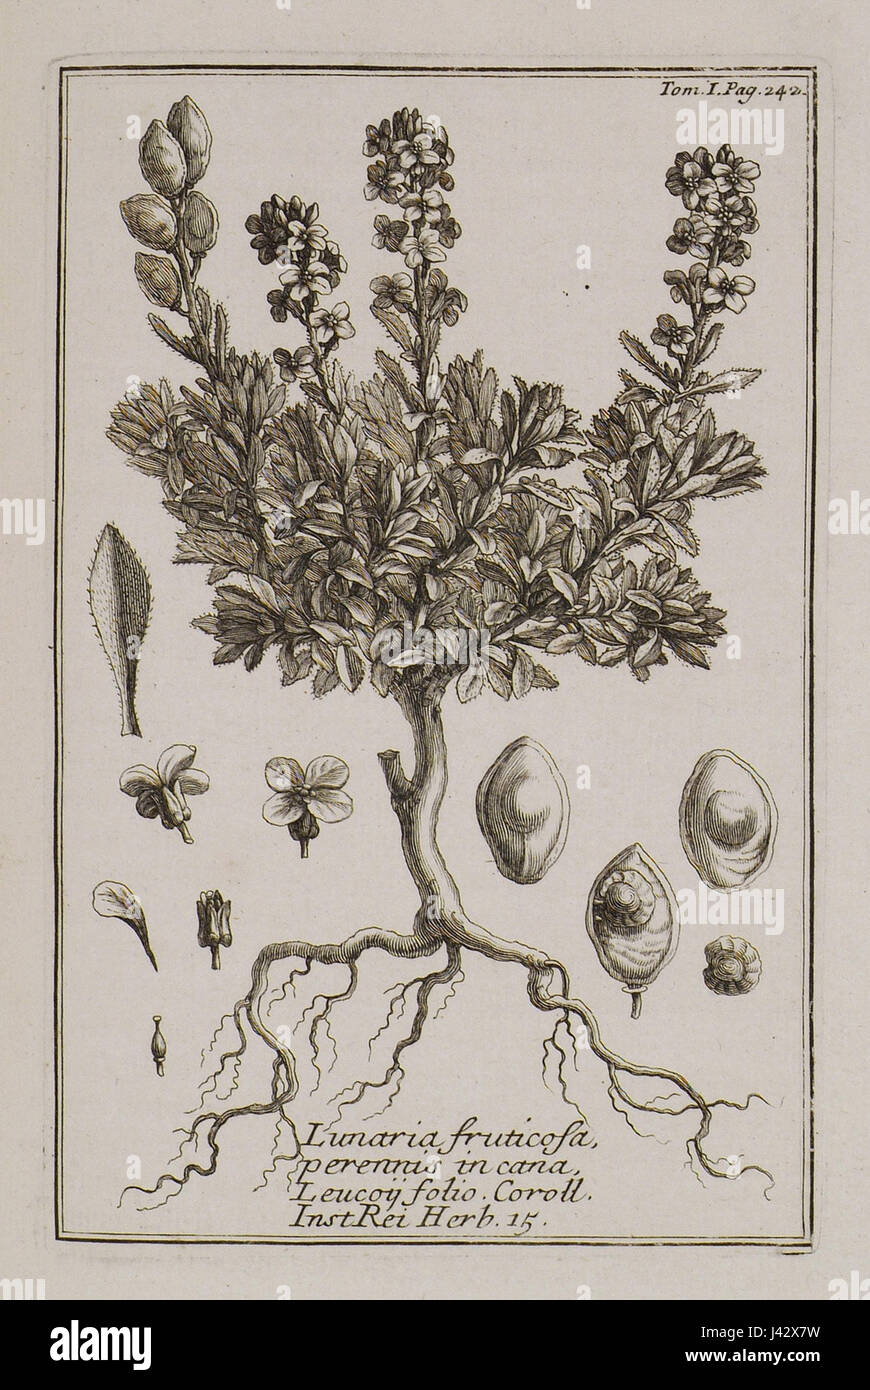 Lunaria fruticosa, perennis, incana, Leucoii folio Coroll Inst Rei herb 15   Tournefort Joseph Pitton De   1717 Stock Photo